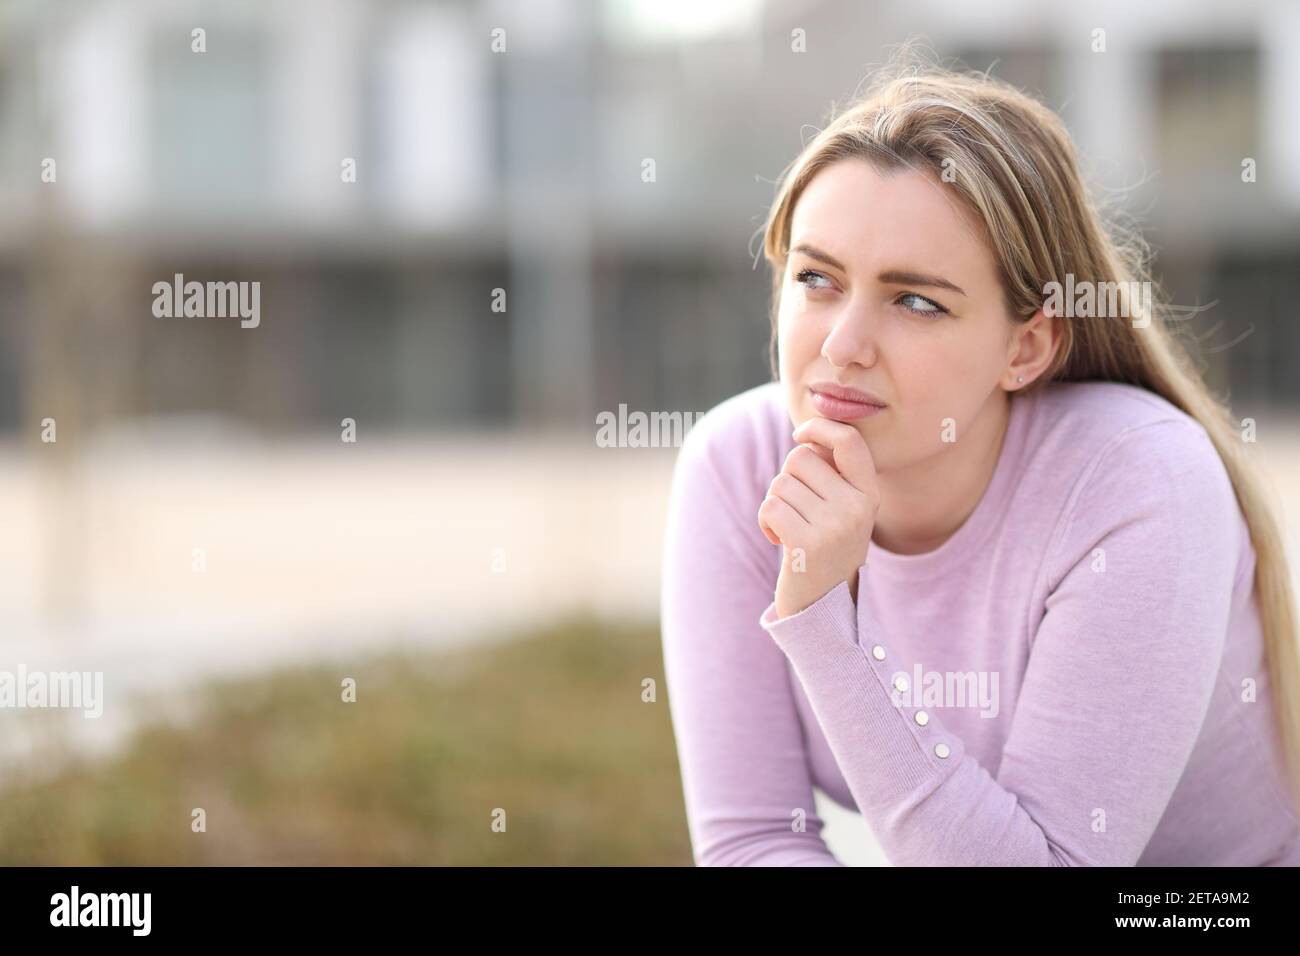 Pensive serious teen looking sideways sitting in the street Stock Photo